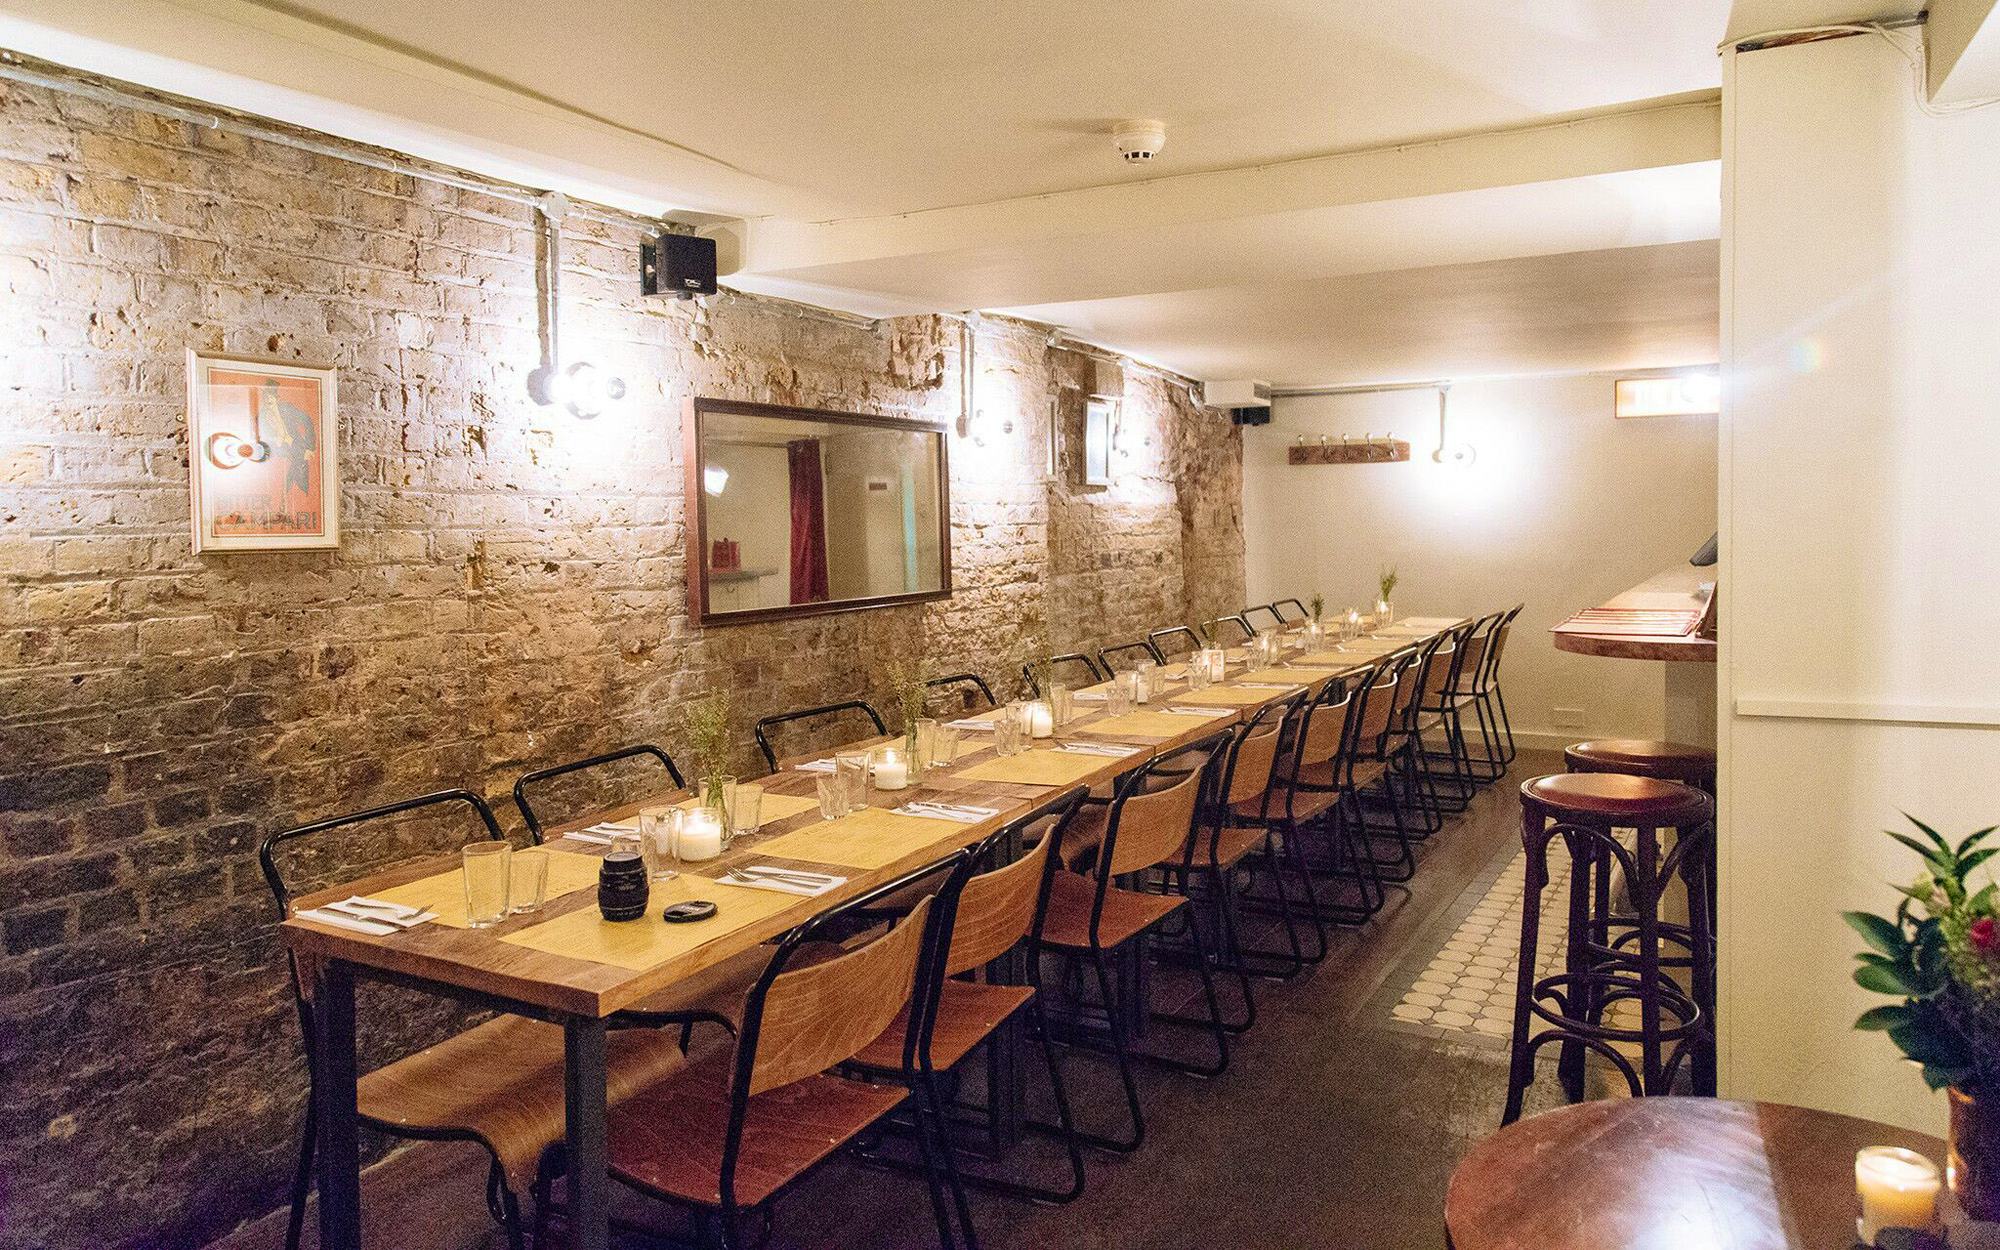 Polpo Soho london restaurants venues events private dining room hire